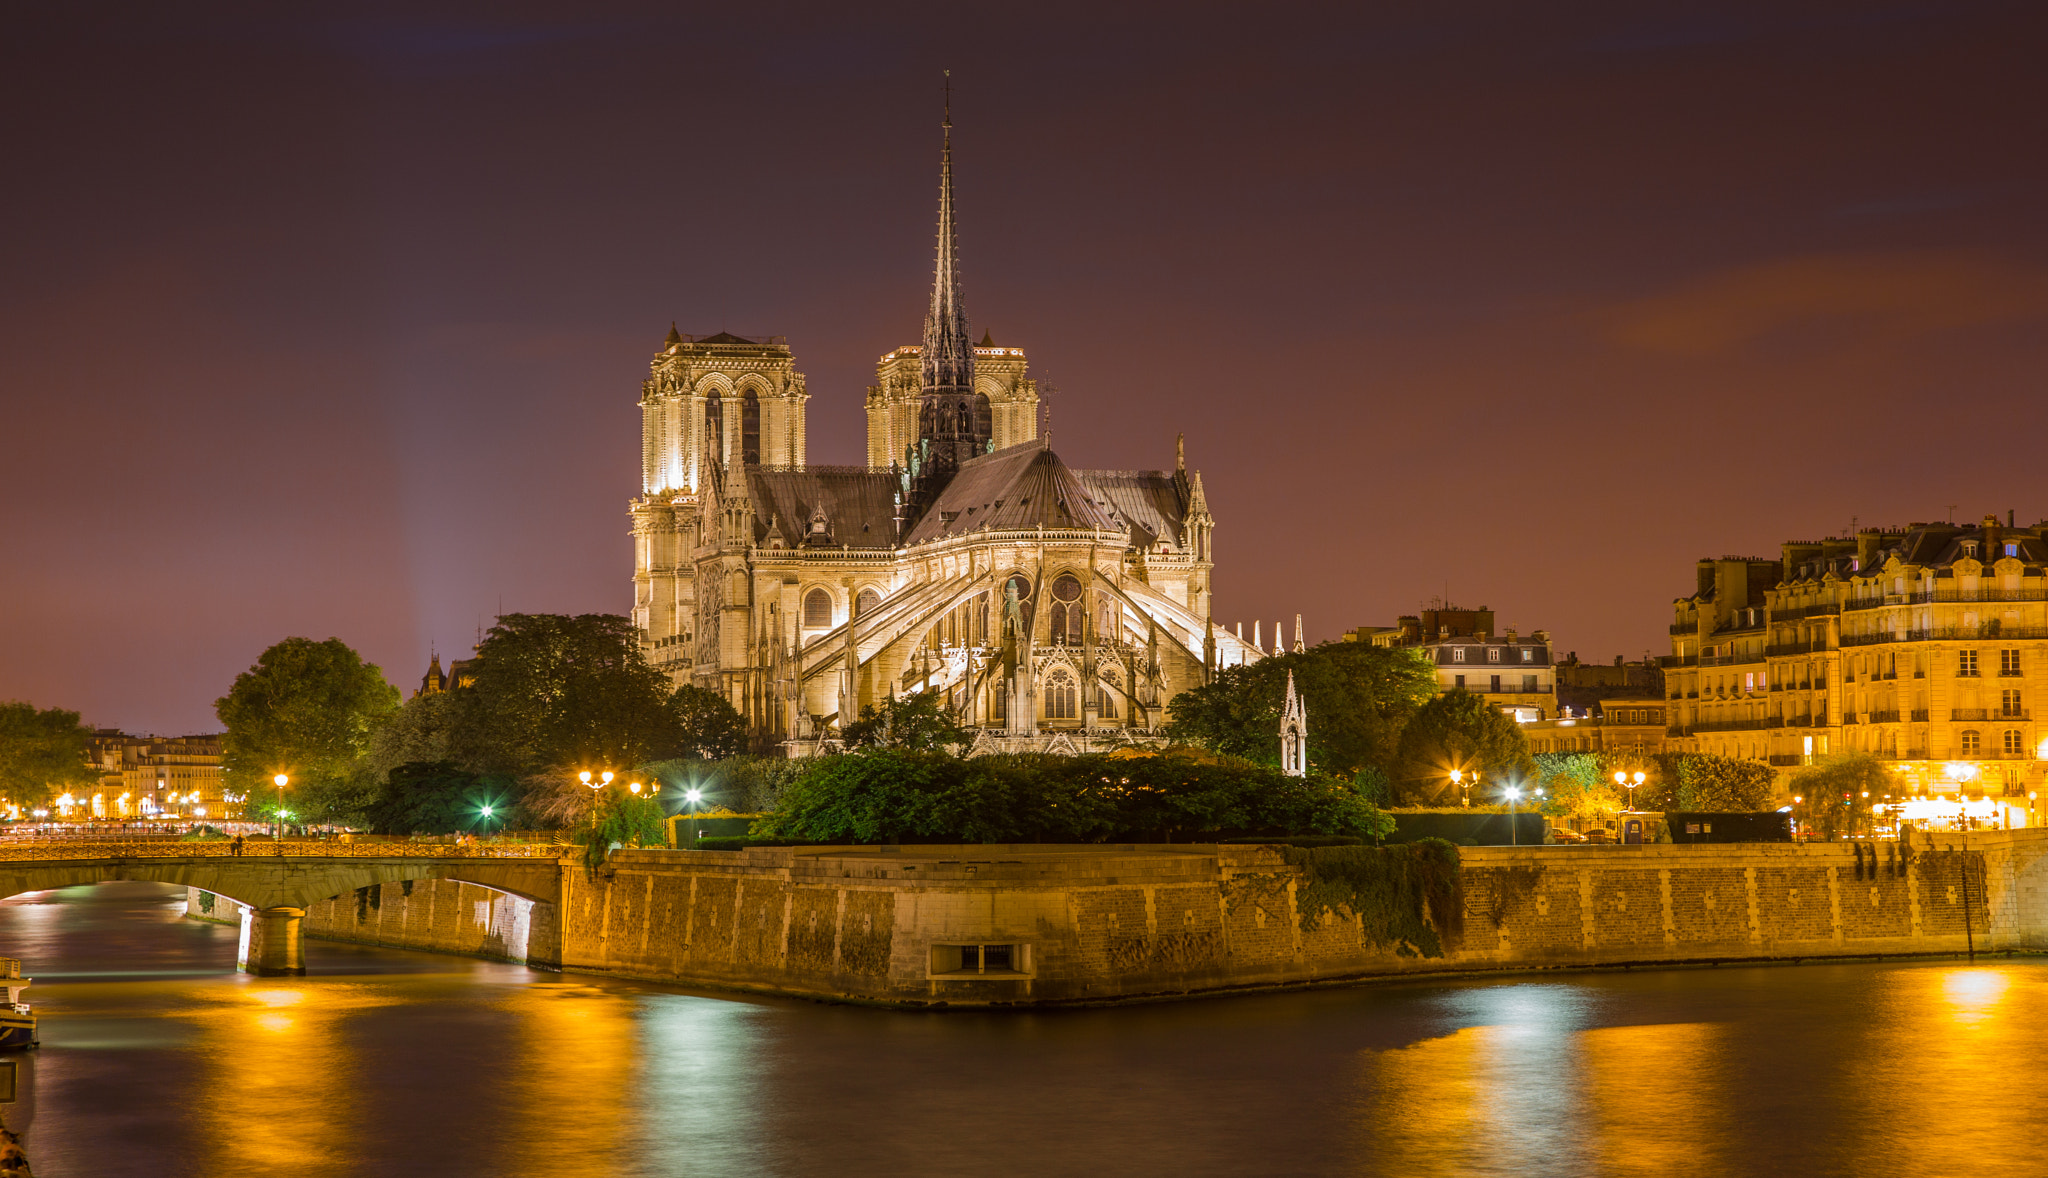 Wallpapers Notre Dame de Paris darkens evening on the desktop